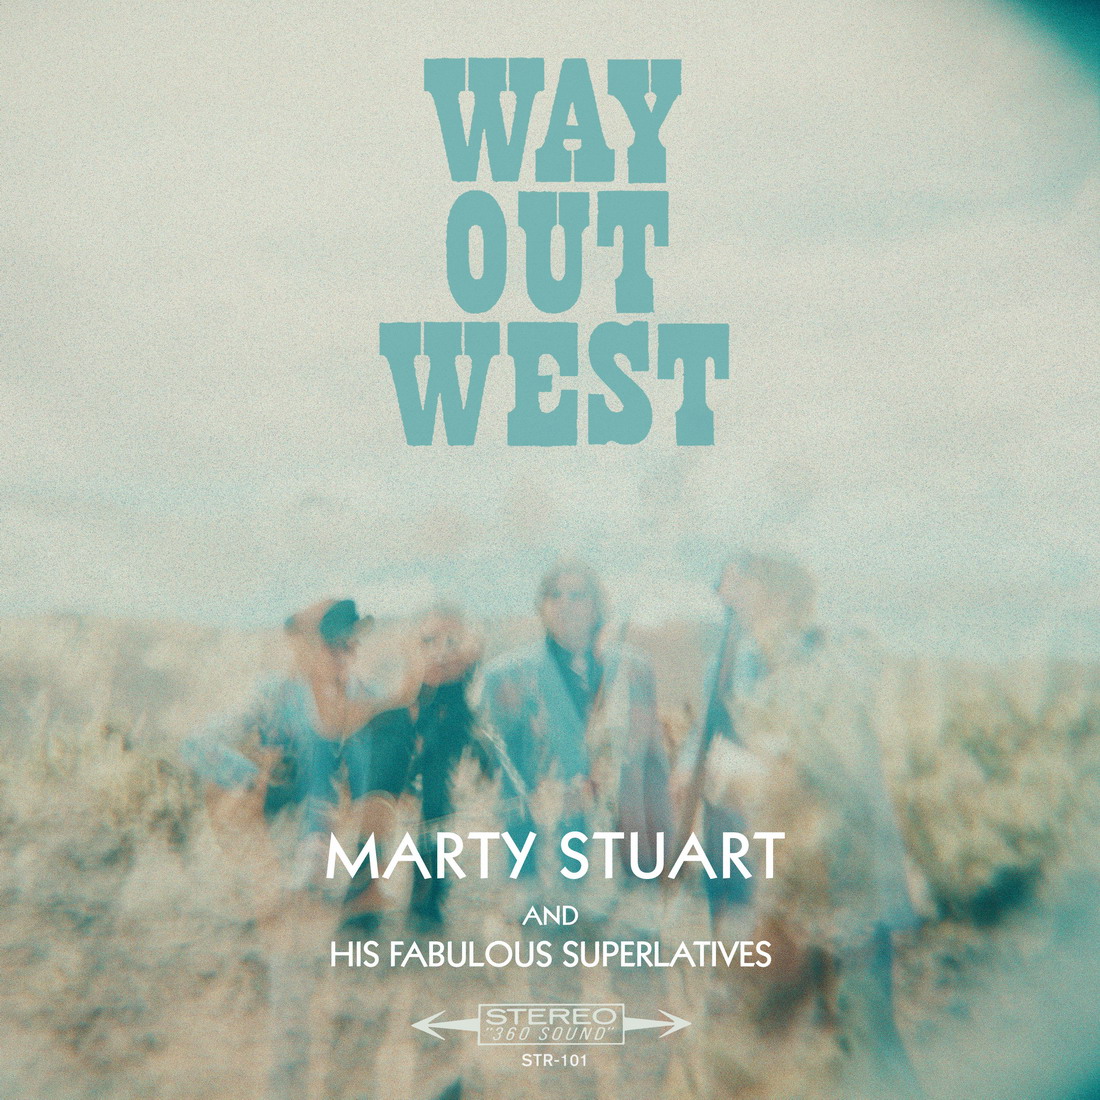 Marty Stuart and His Fabulous Superlatives – Way Out West (2017) [HDTracks FLAC 24bit/96kHz]